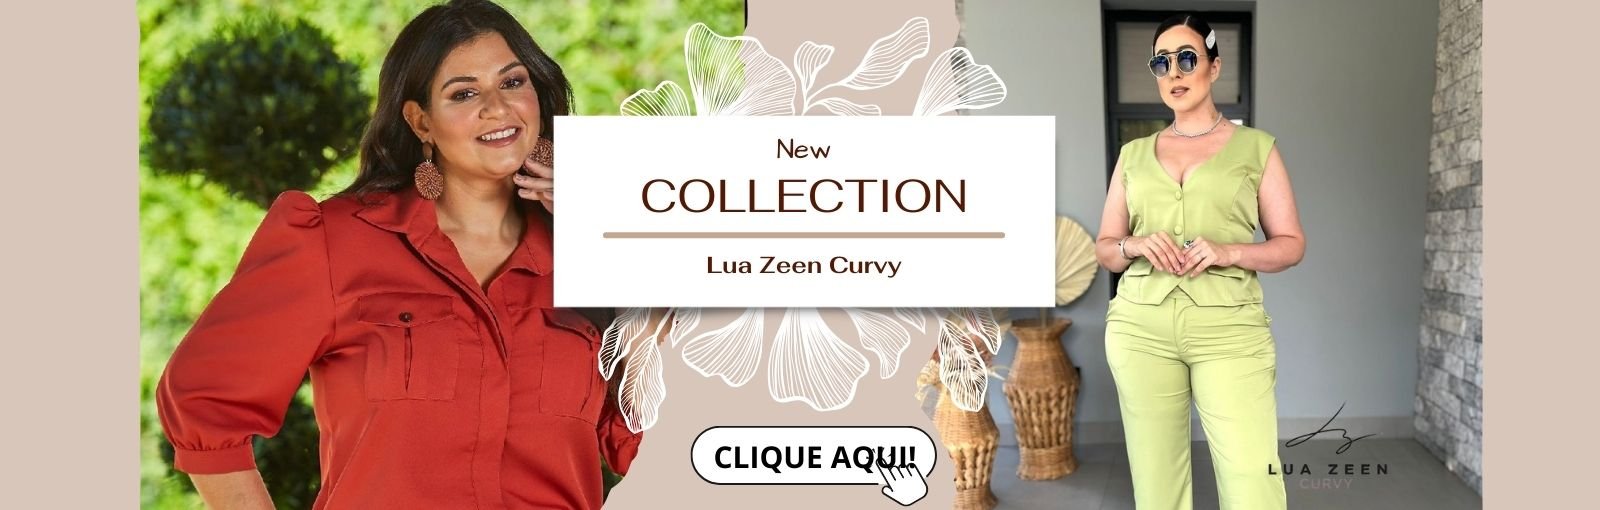 Lua Zeen Curvy  Loja de roupas moda plus size - Luazeen Curvy